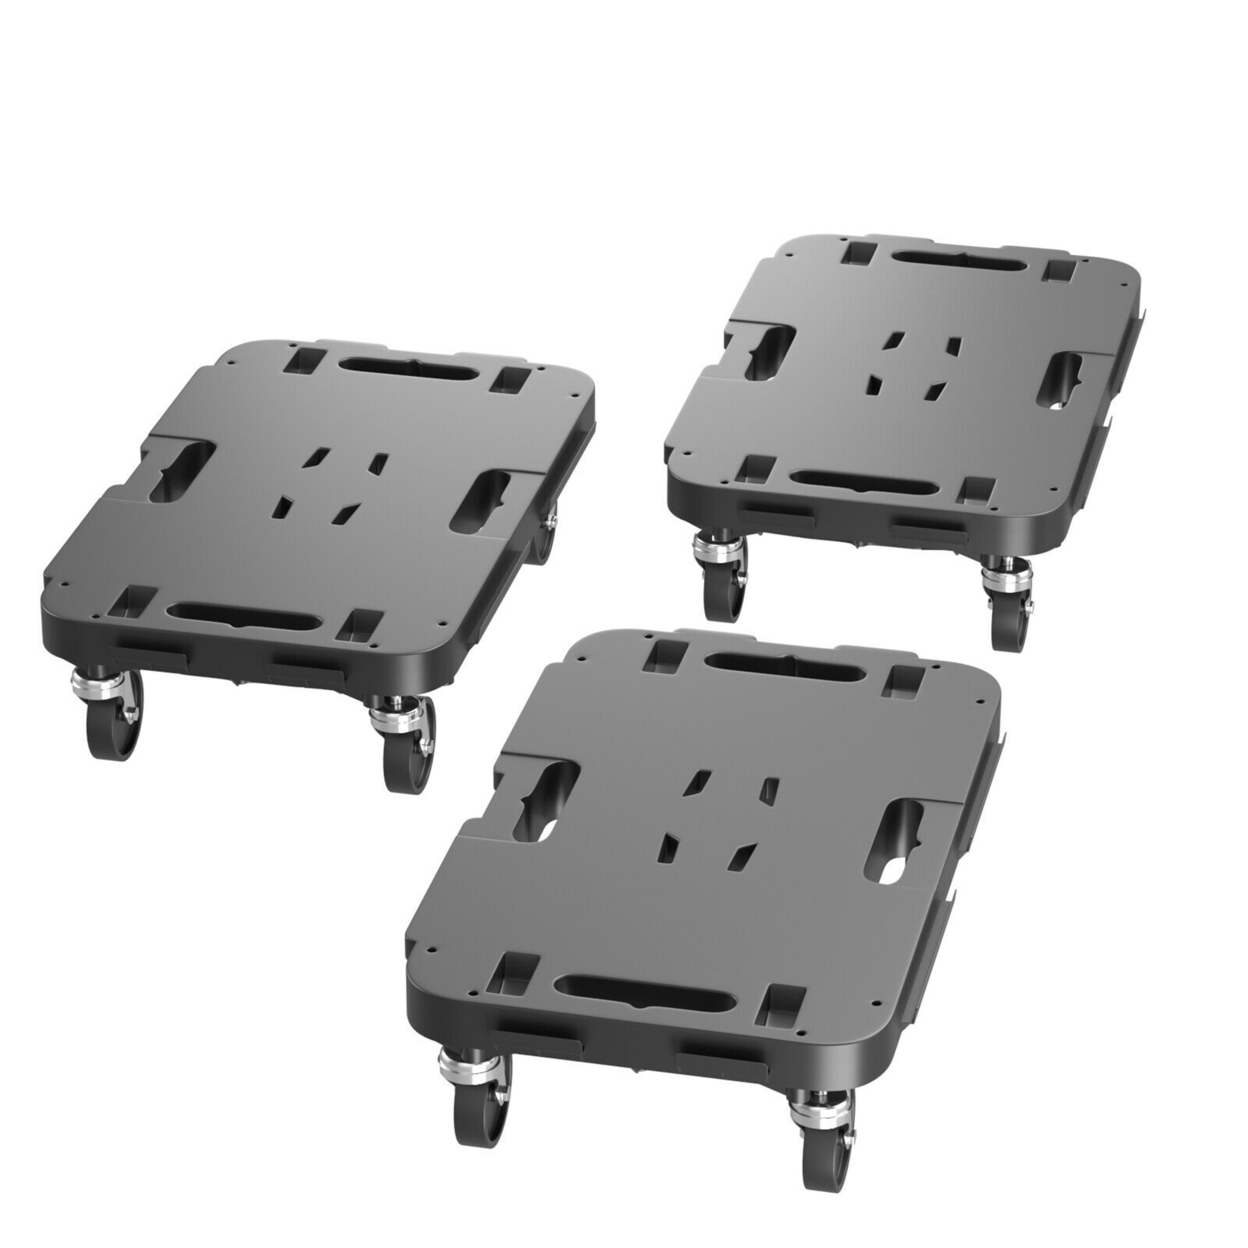 Platform Dolly Interlocking Furniture Mover 660lbs Weight Capacity - 2 Pcs